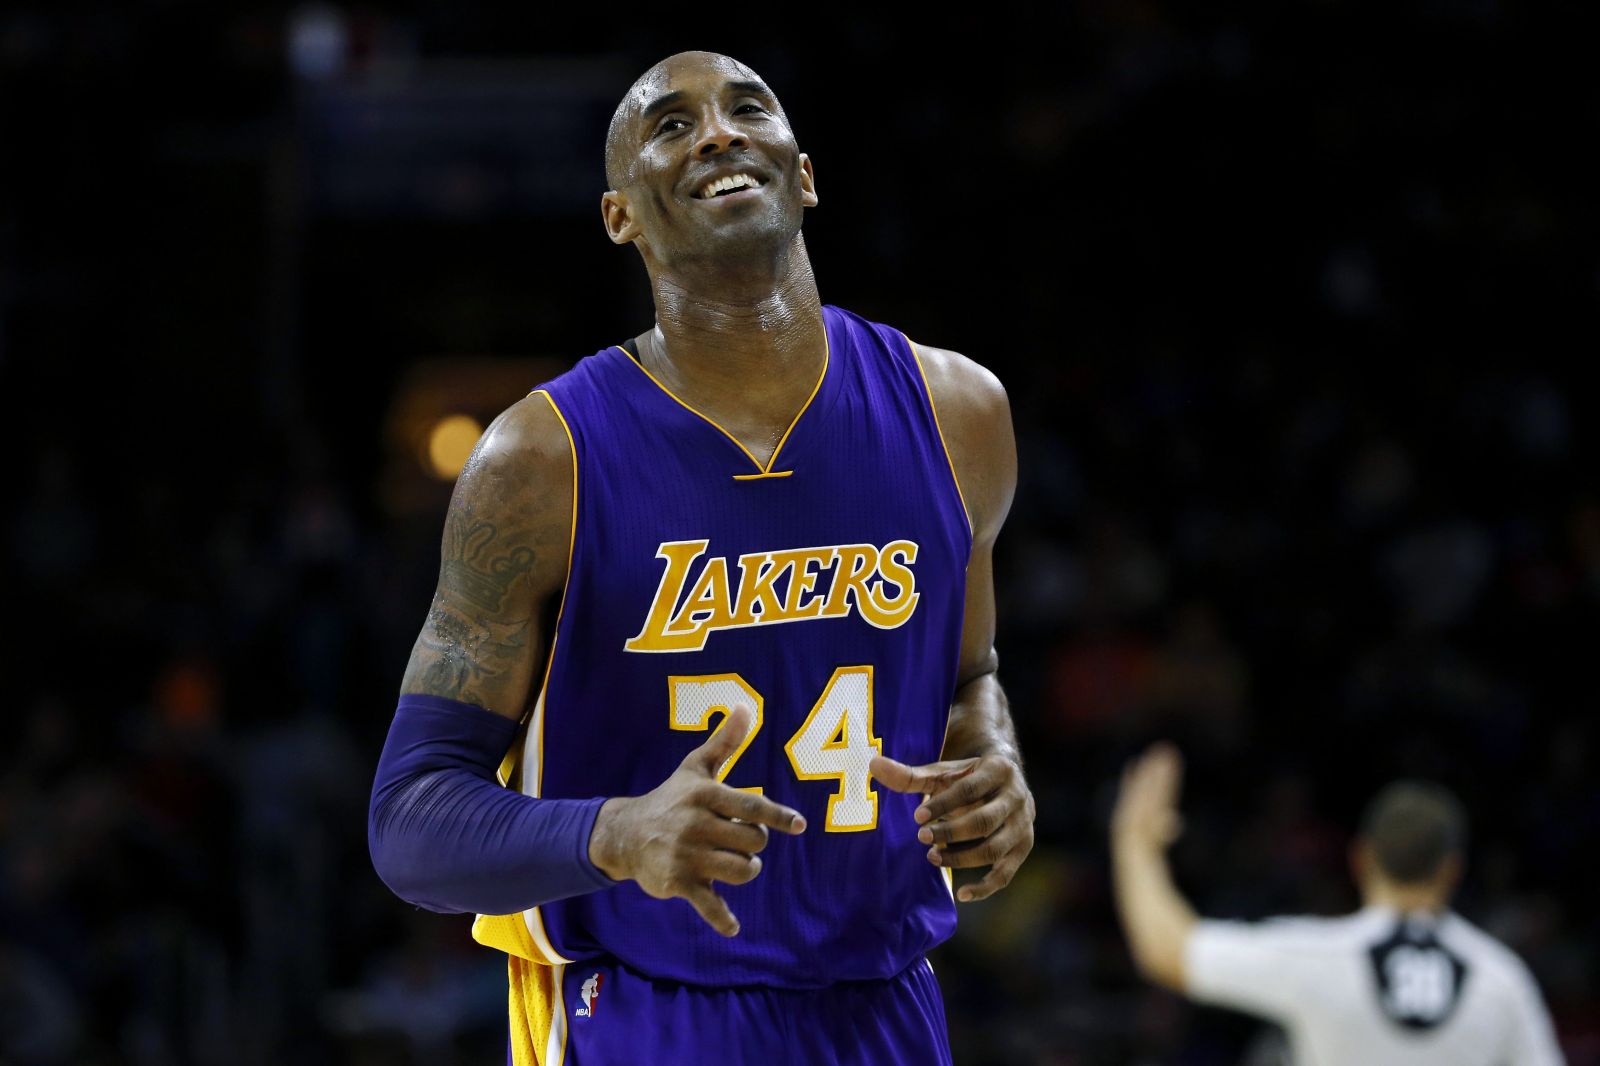 NBA si vo včerajších zápasoch uctila pamiatku Kobeho Bryanta. Nechýbala minúta ticha ani 24-sekundové pravidlo